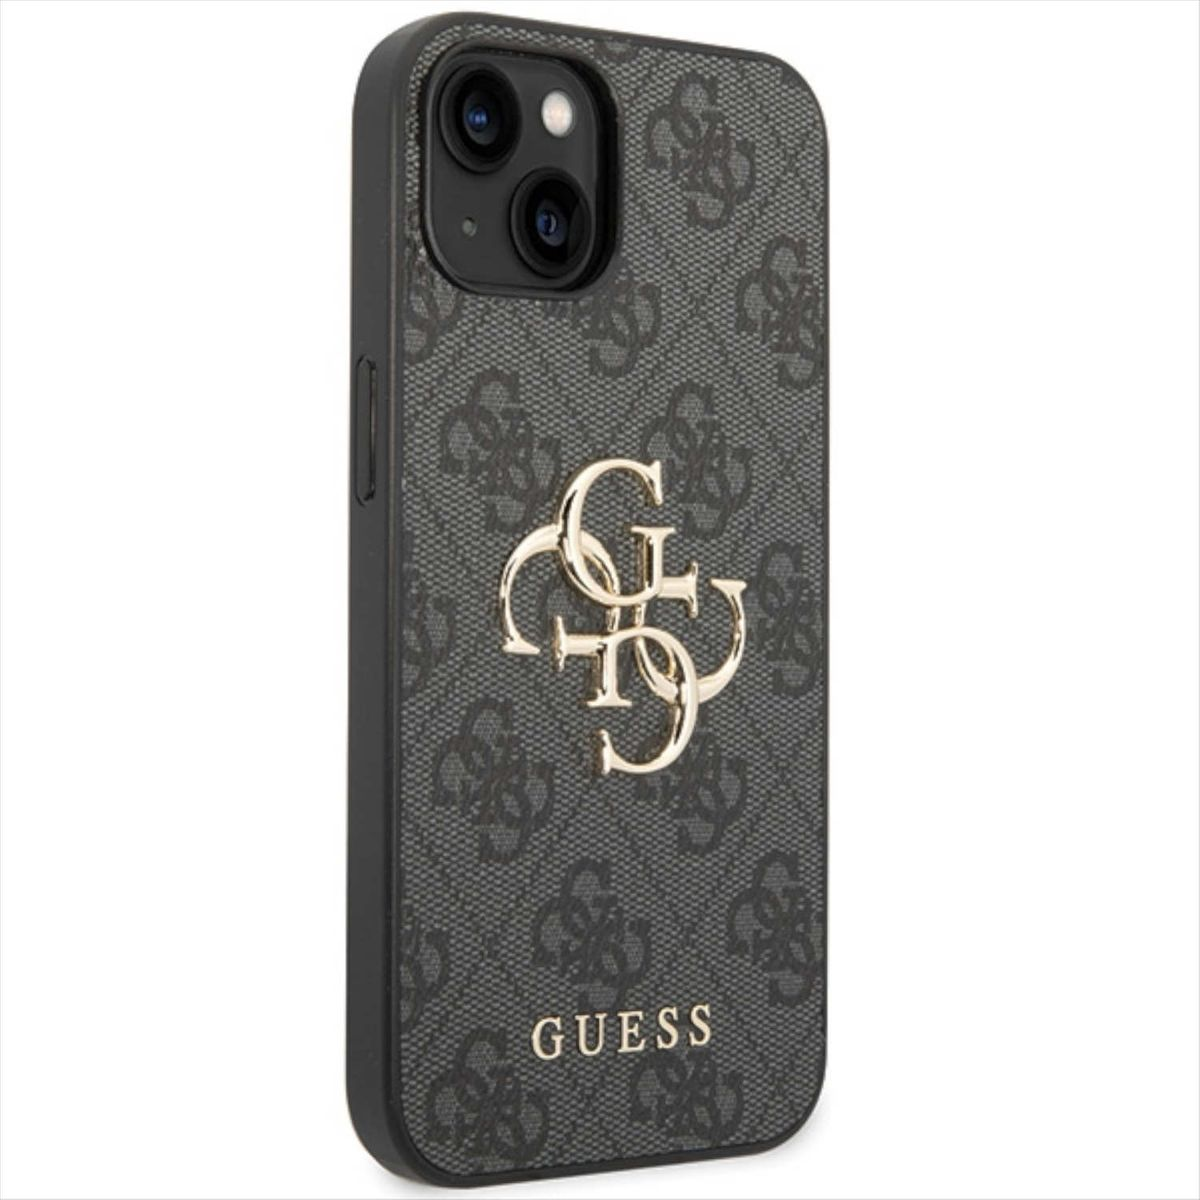 Hülle, GUESS Metal Backcover, Grau 15, Design Gold Logo Apple, iPhone 4G